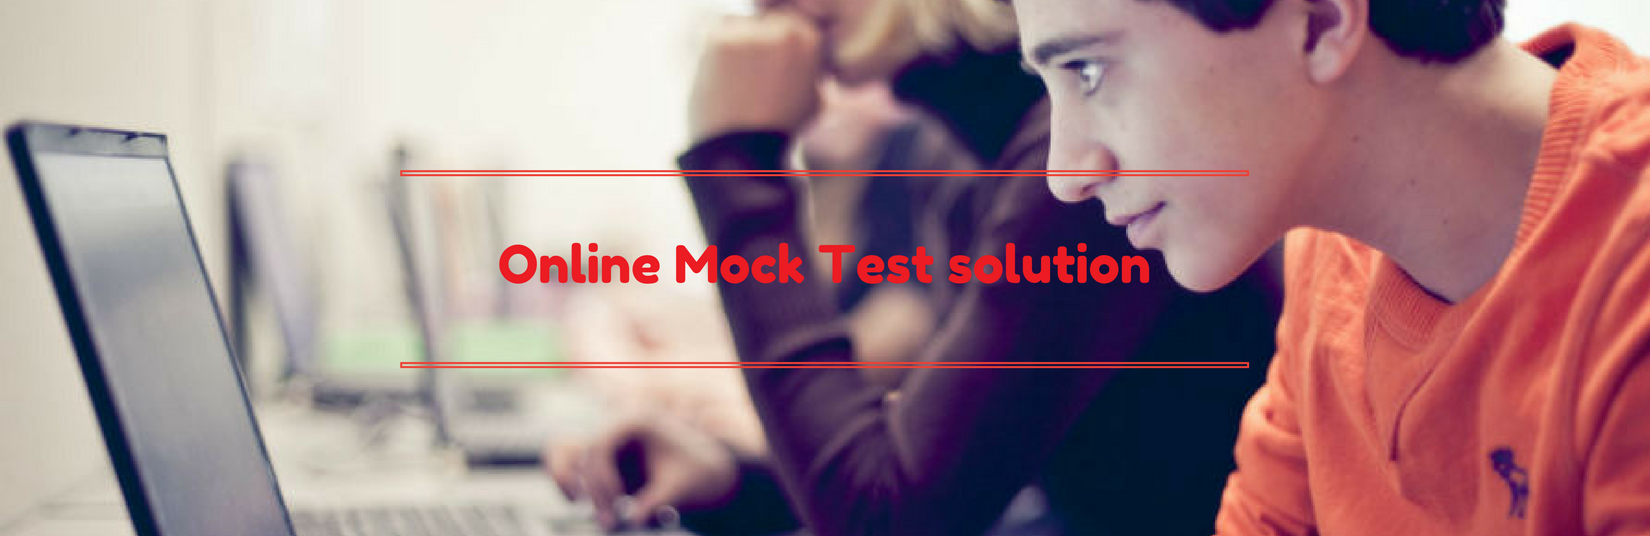 Online-Mock-Test-Website-App-Development